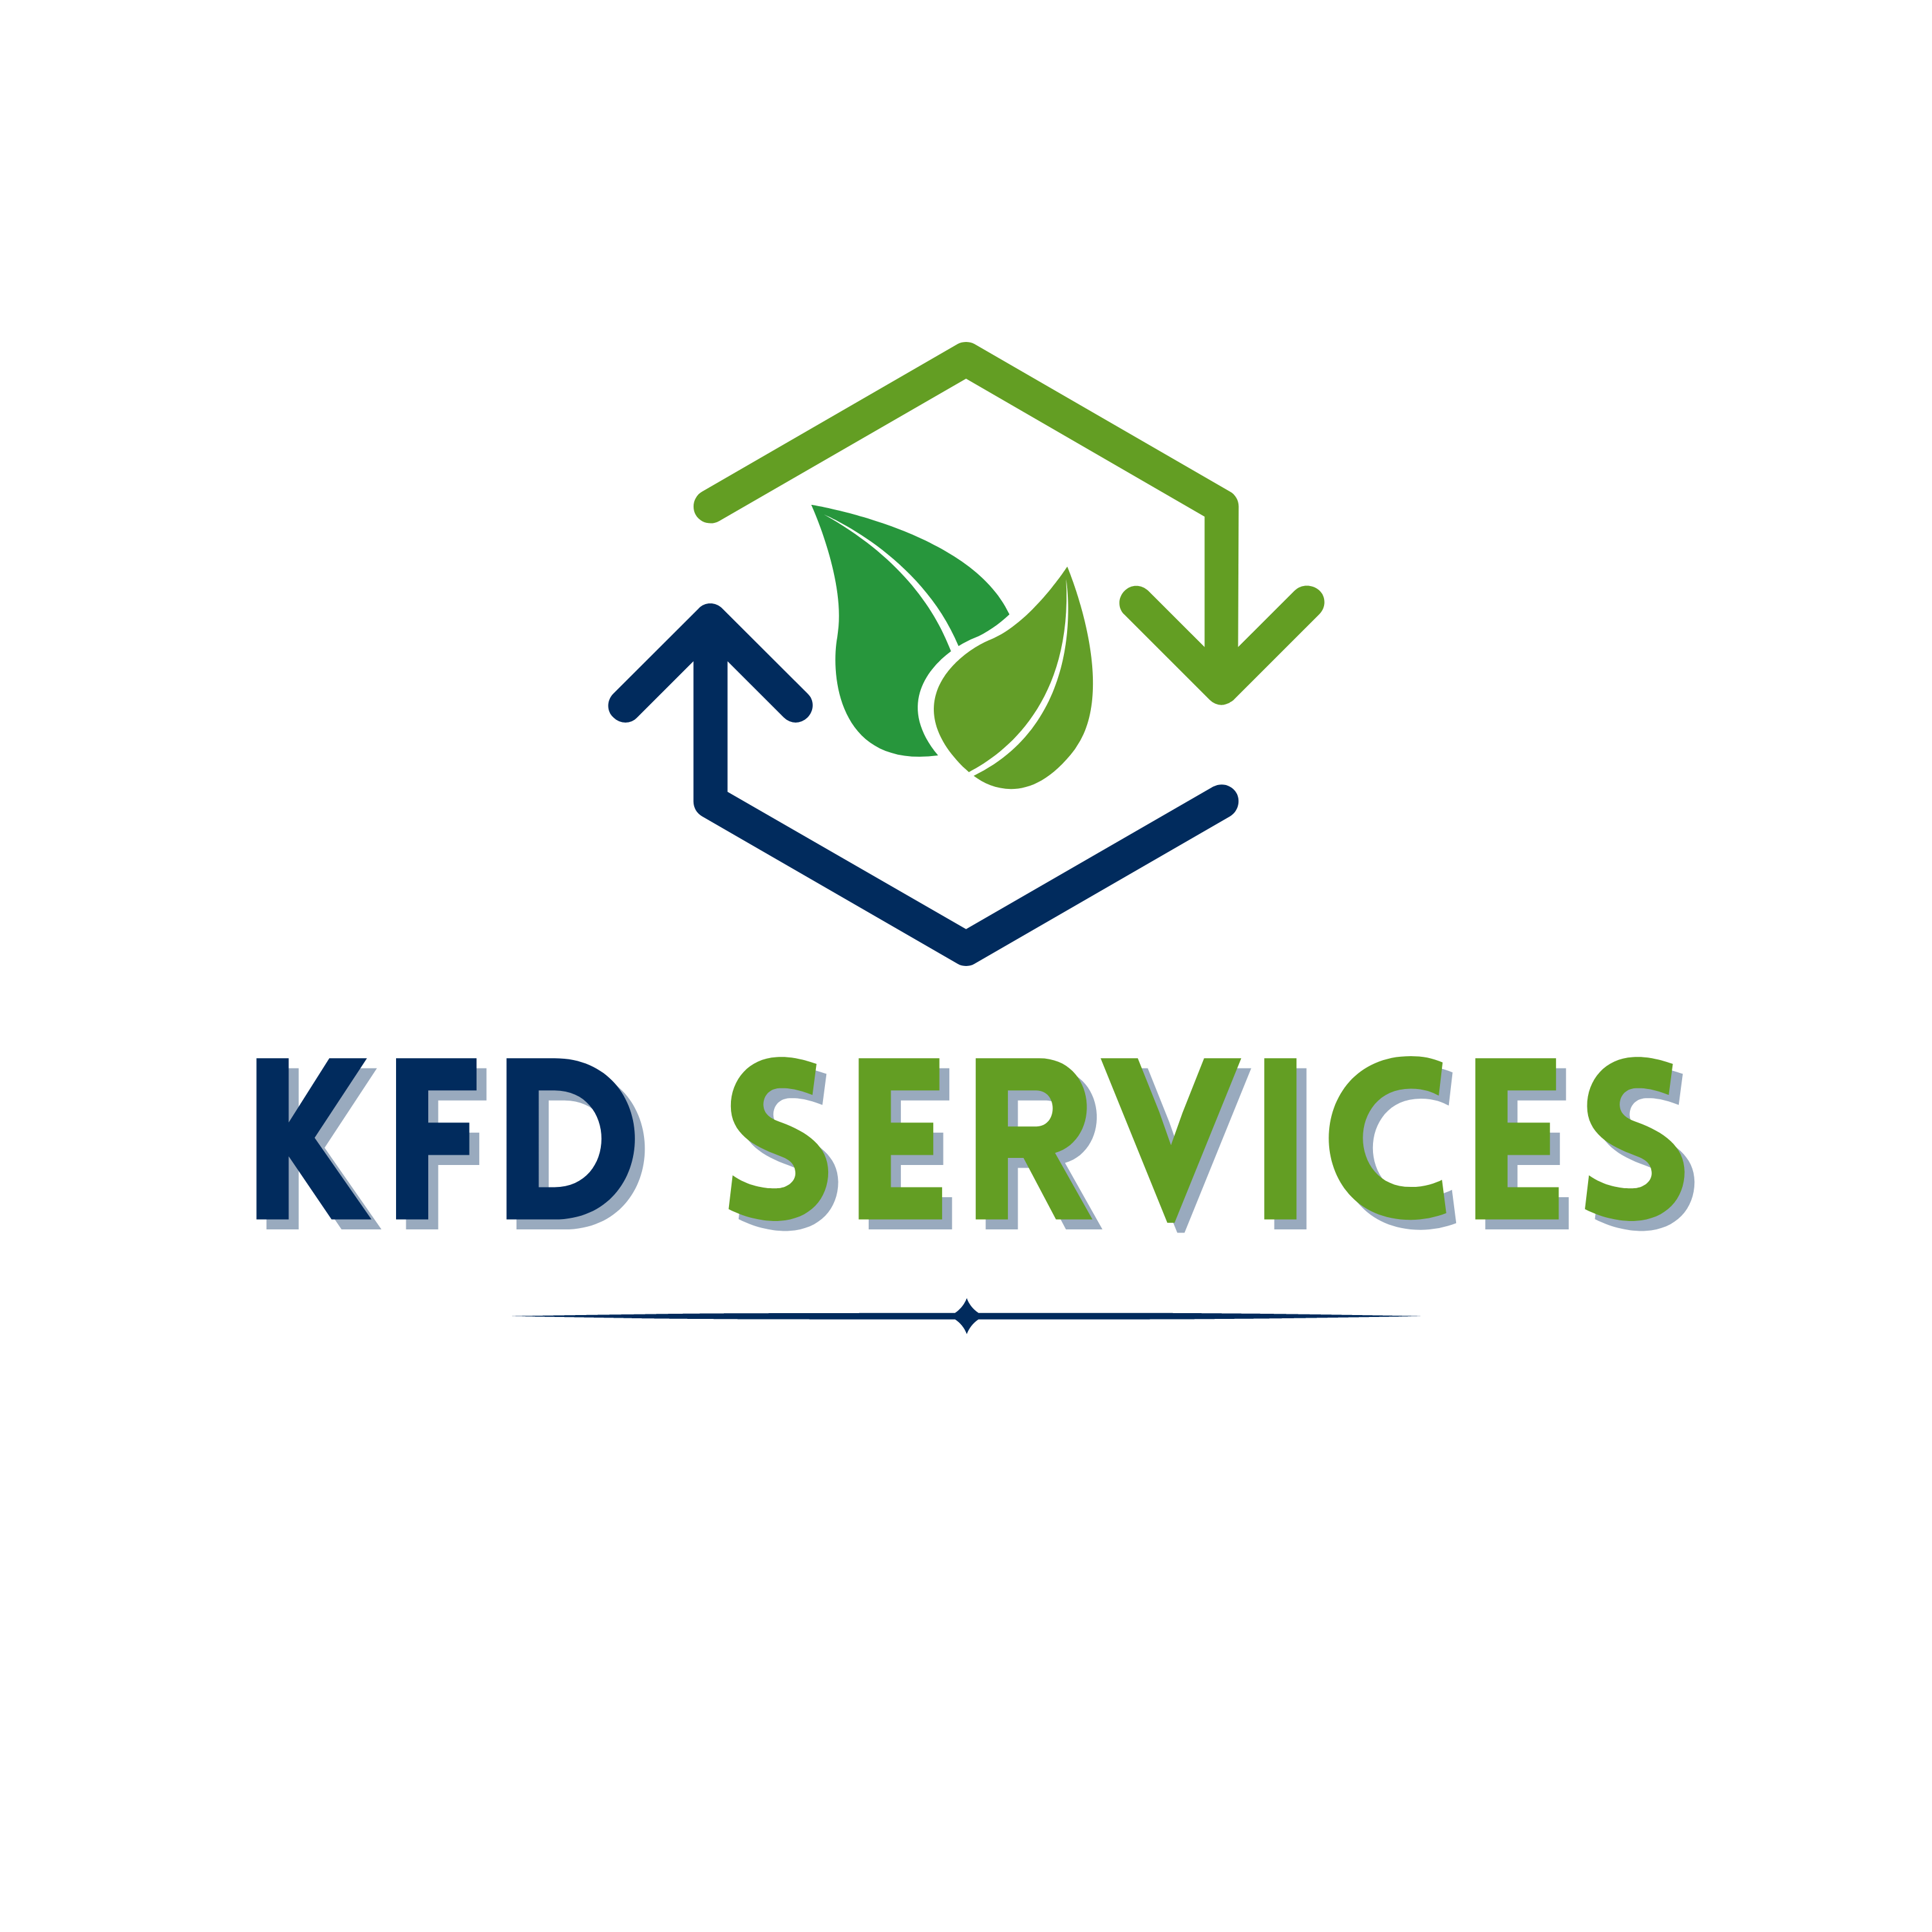 KFD SERVICES - Sabma Digital